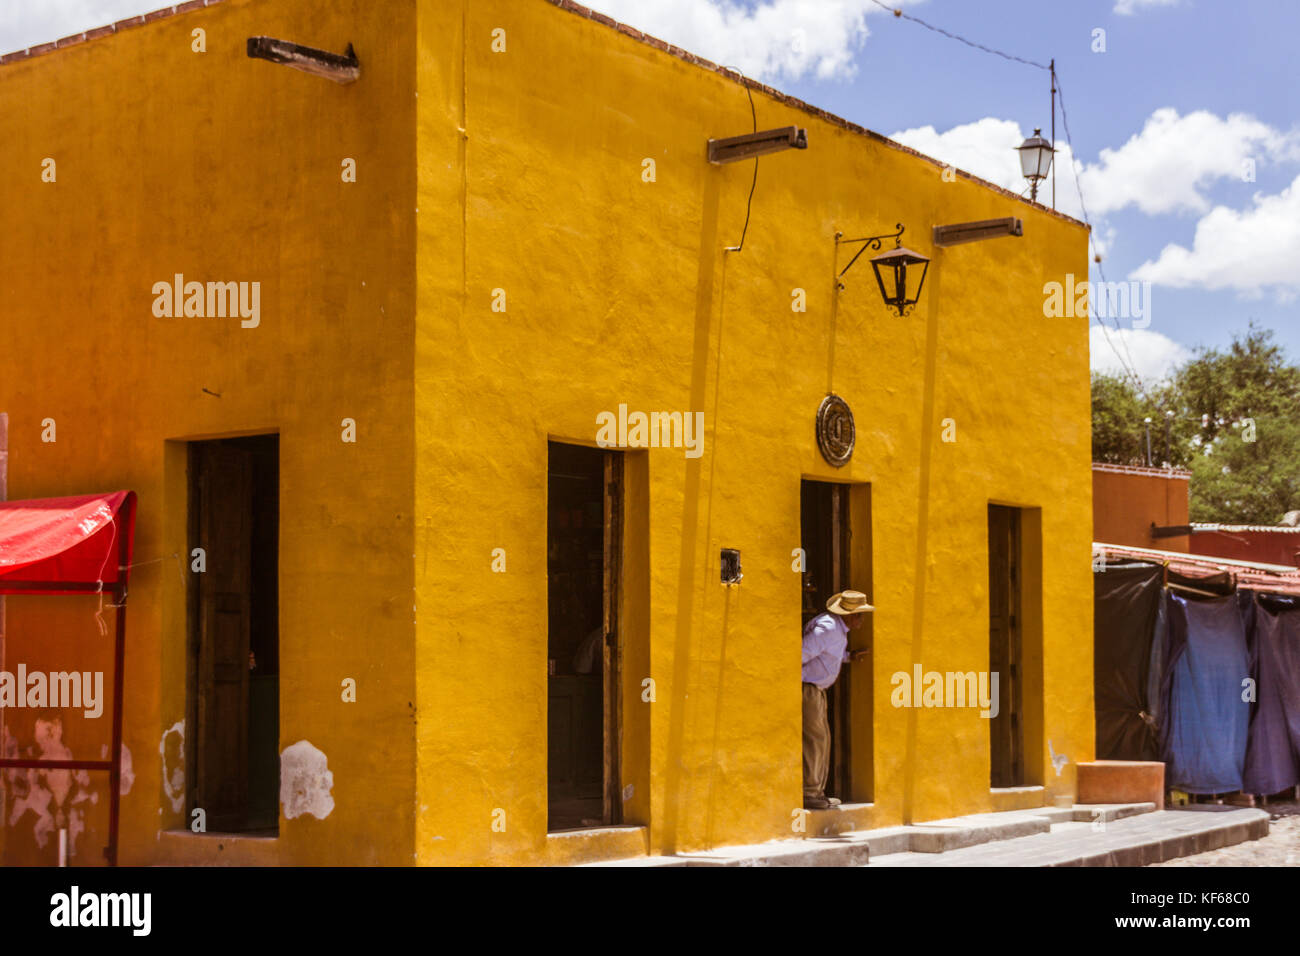 San Miguel de Allende, Guanajuato/Mexiko - 06. 22. 2017: Traditionelle mexikanische Hausfassade Stockfoto